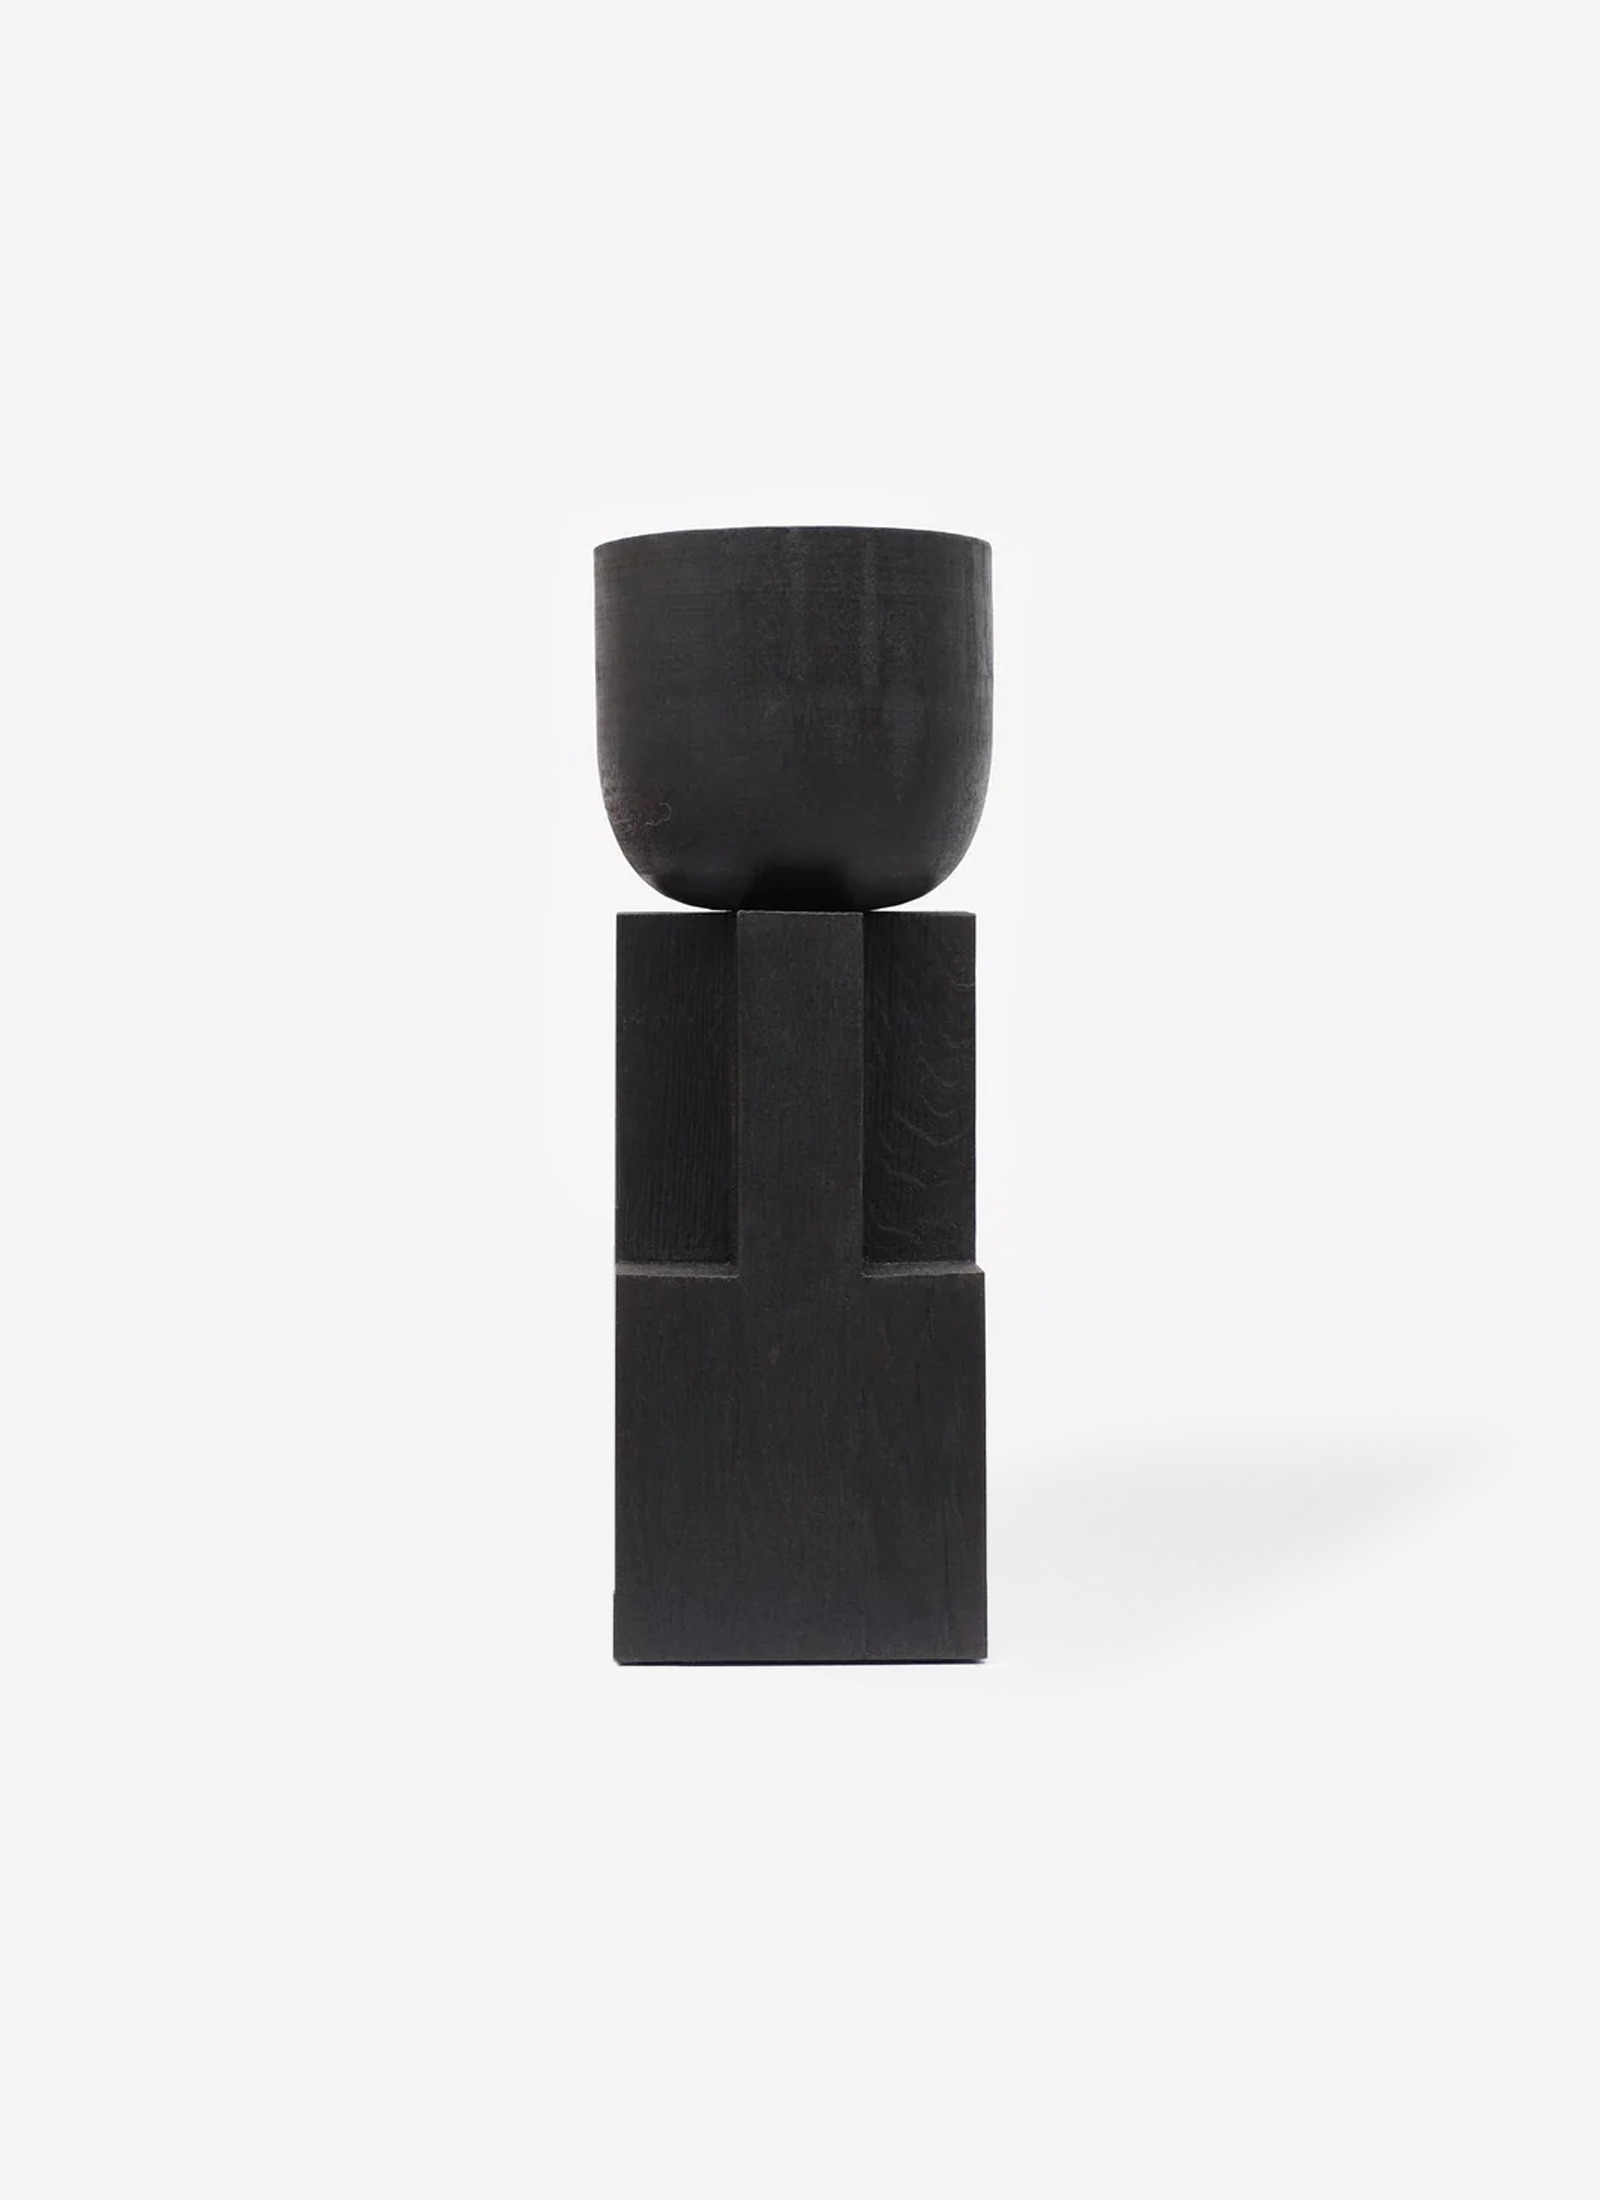 Goblet Vase - Black